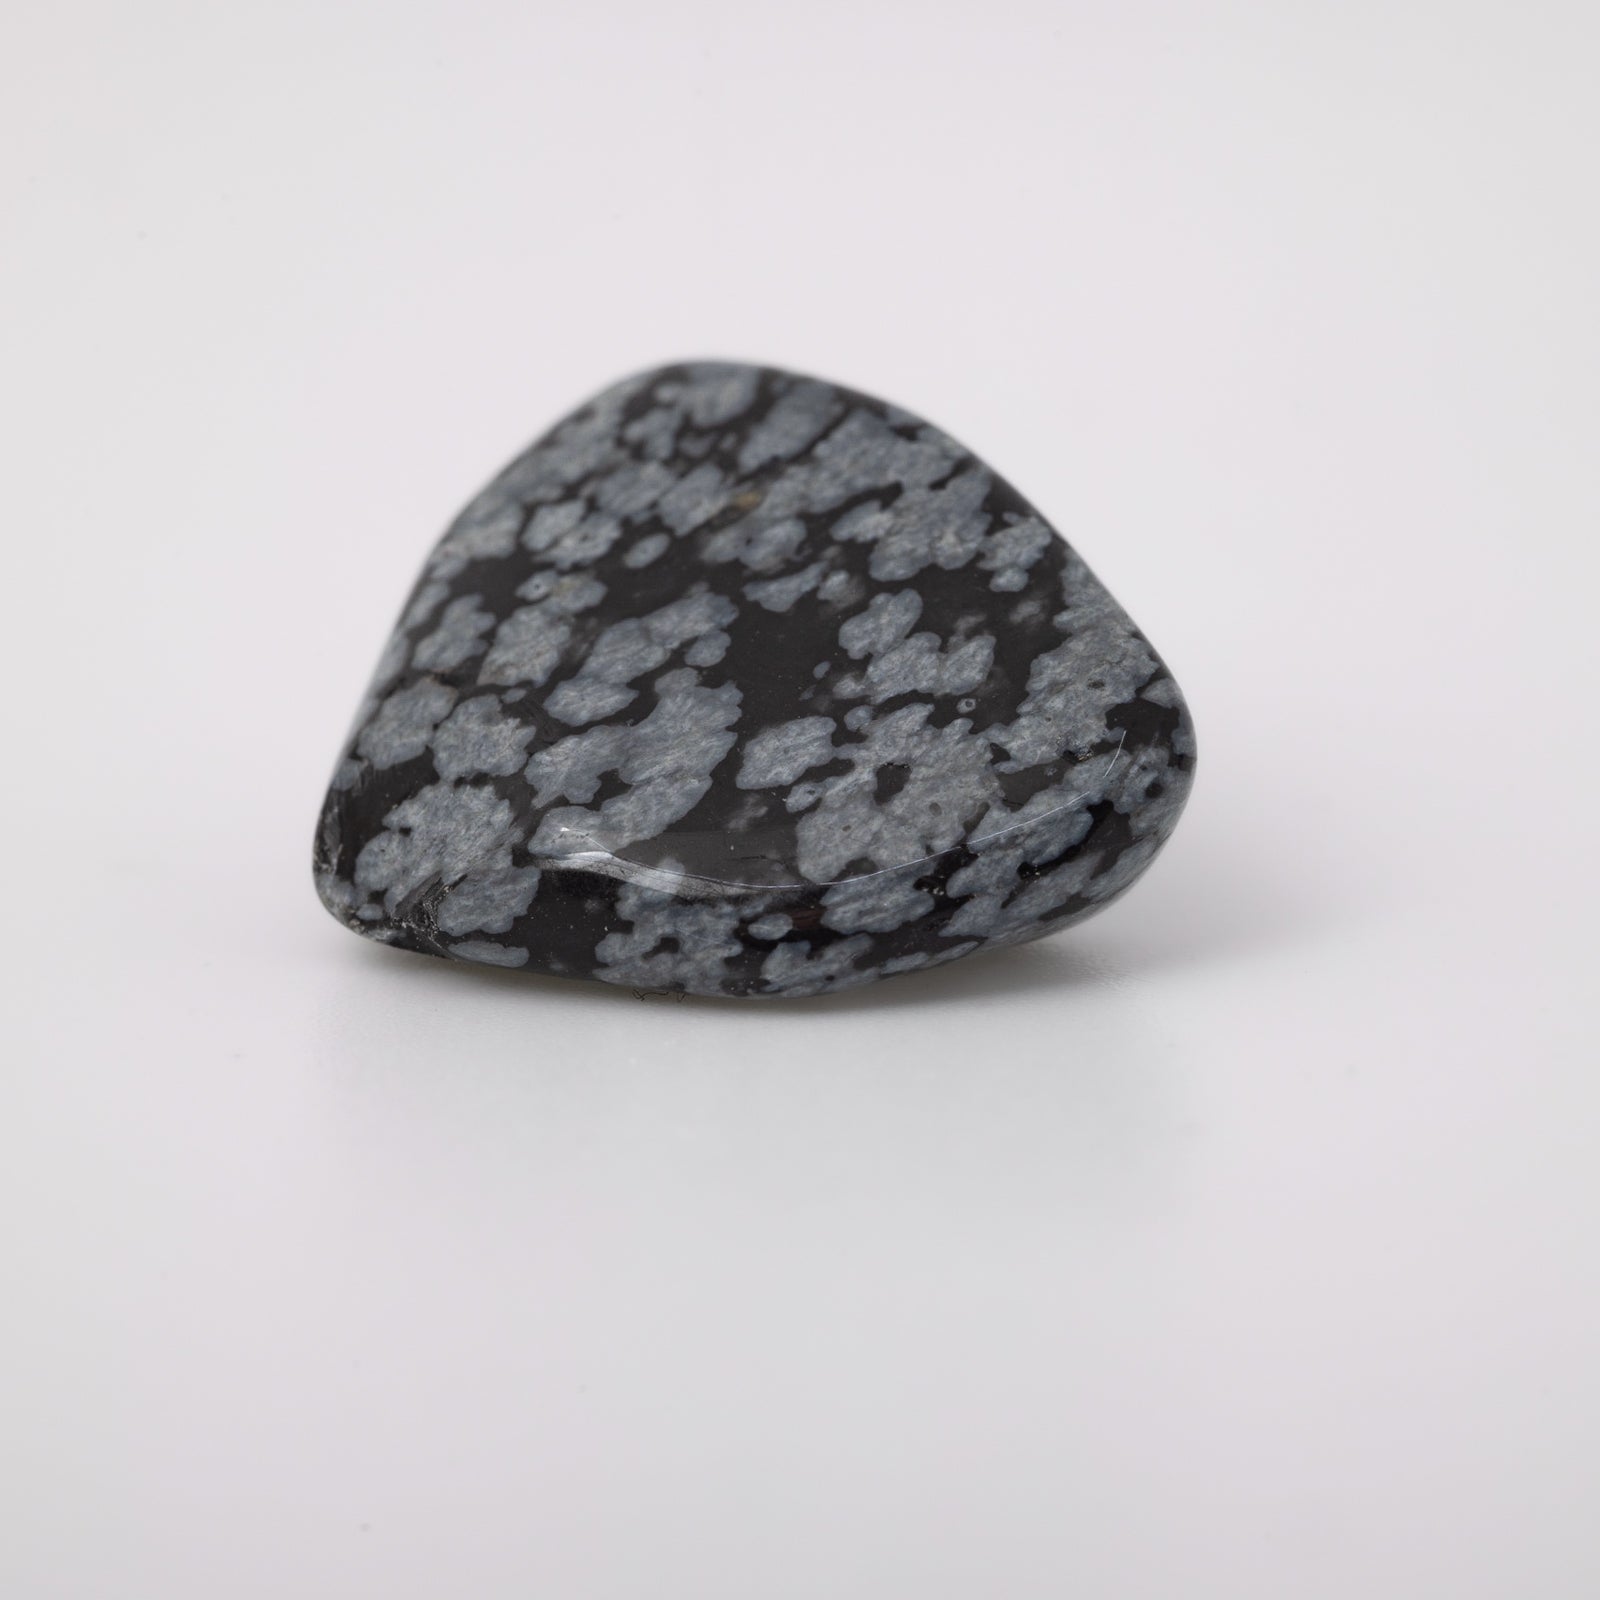 Snowflake Obsidian Tumbled Crystals - Past Life Recall & Healing - Juniper Stones